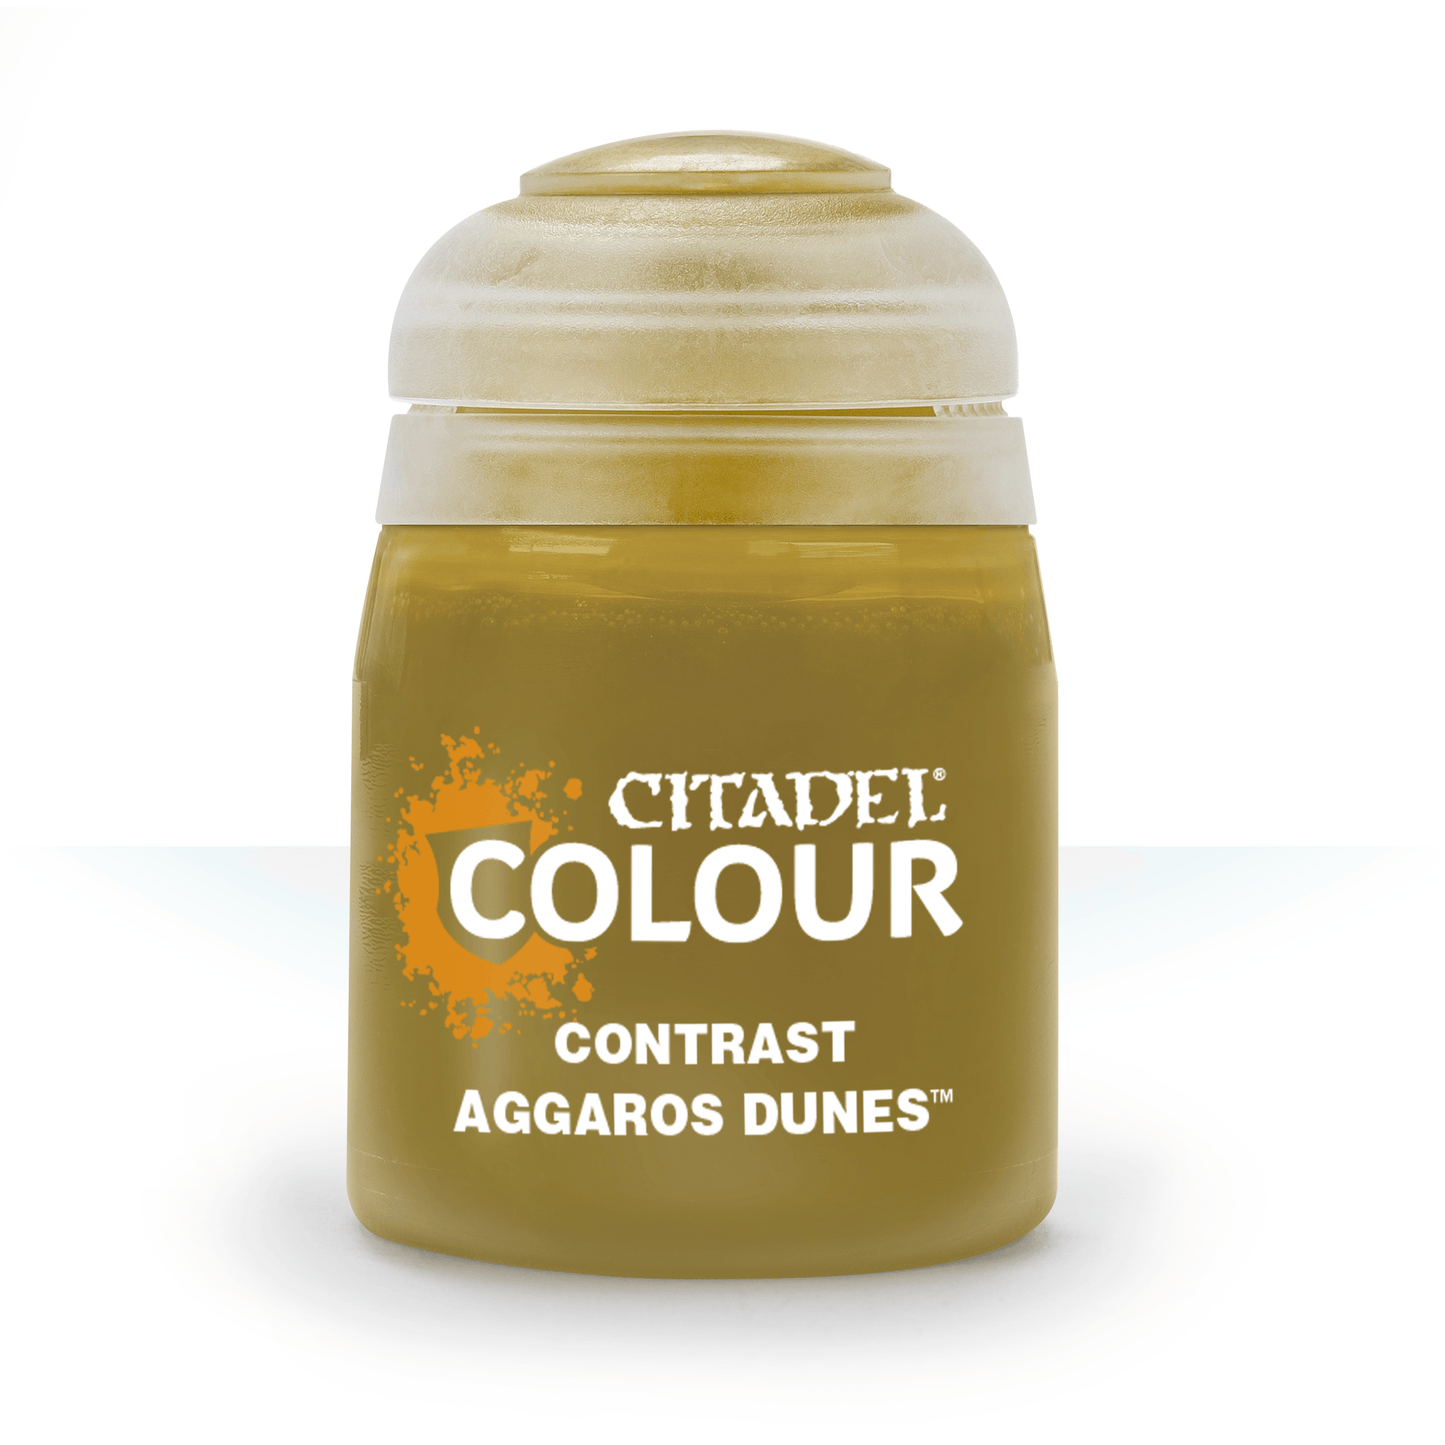 Citadel Colour - Aggaros Dunes Contrast Paint